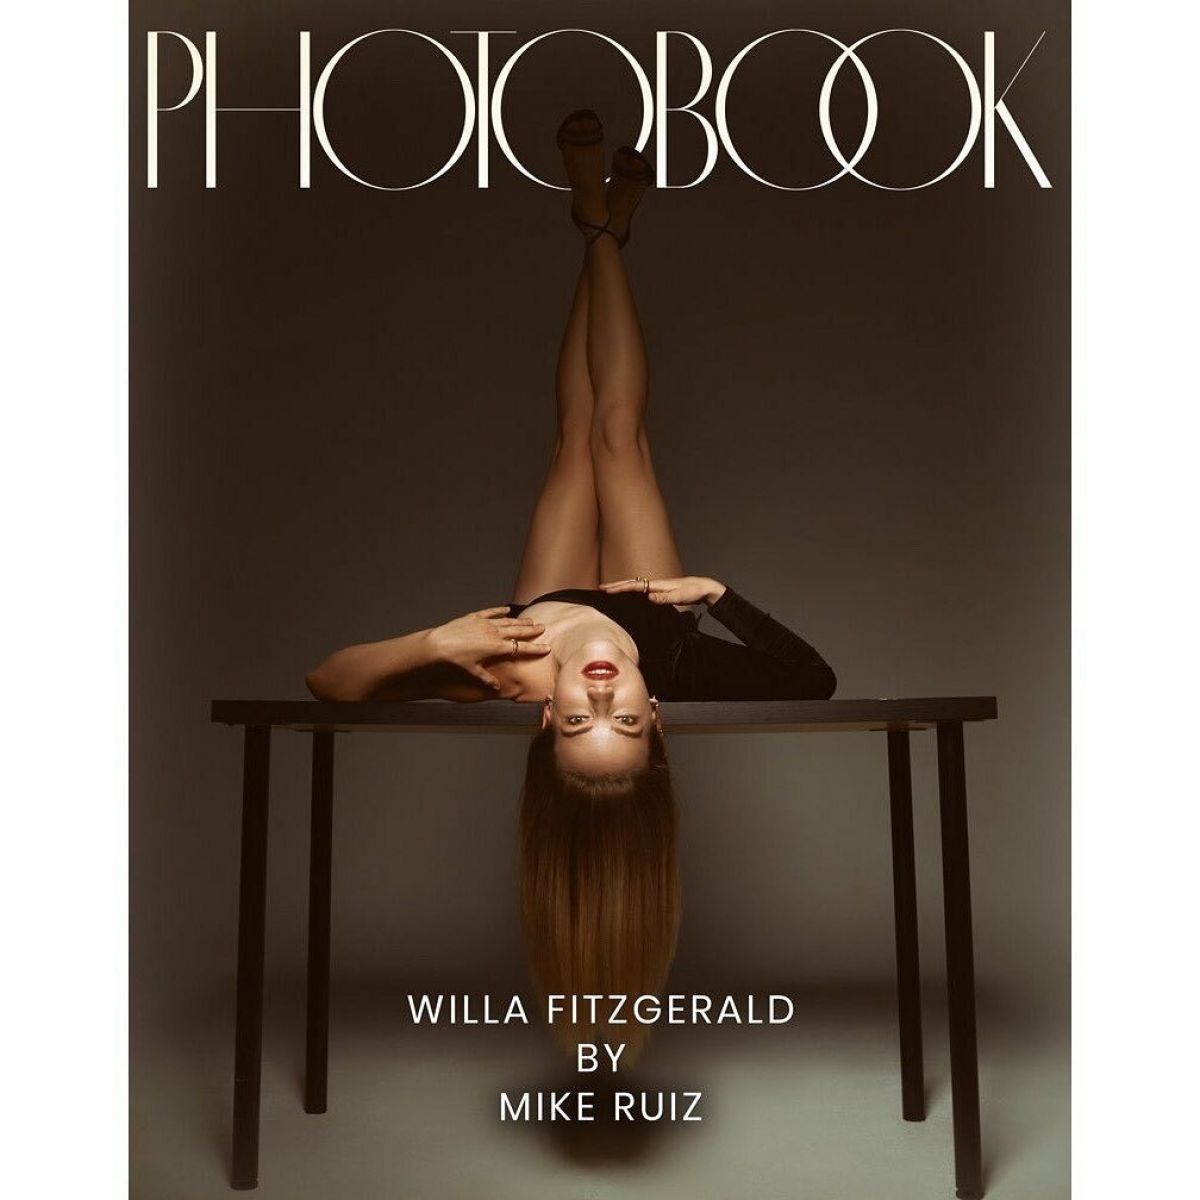 Willa Fitzgerald For Photobook